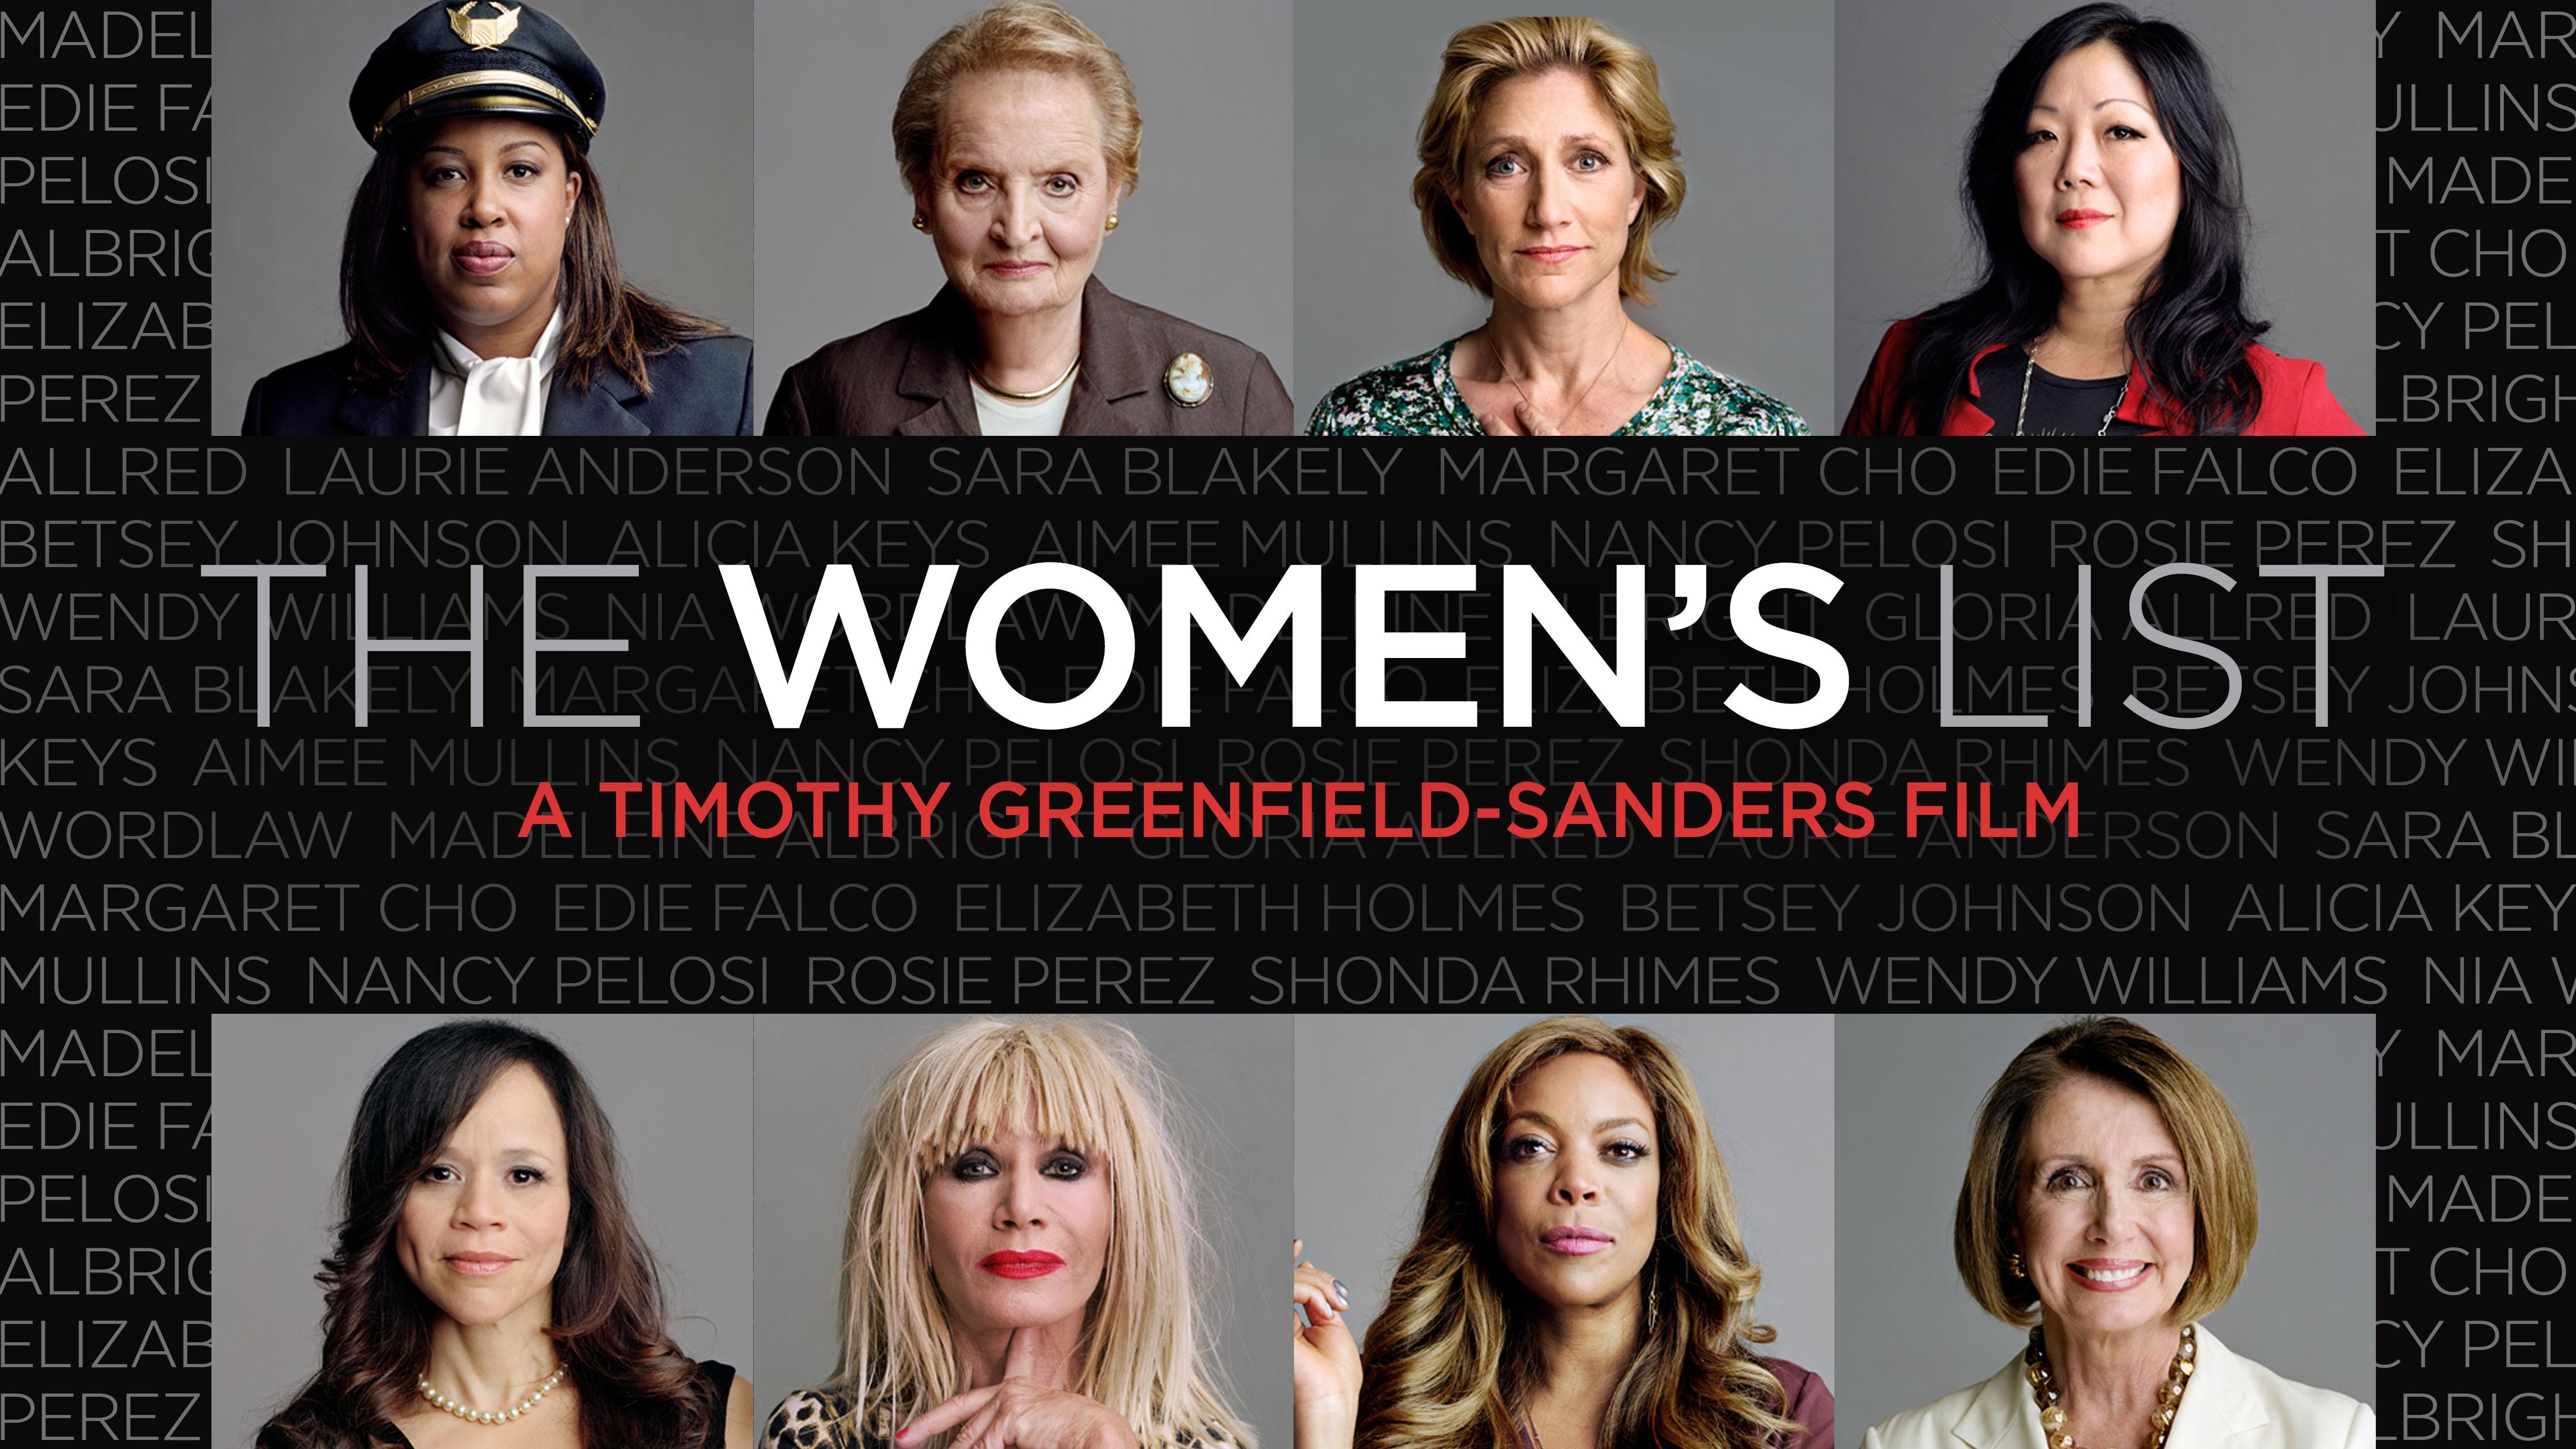 List women. Списки женщин фото. Listed woman.